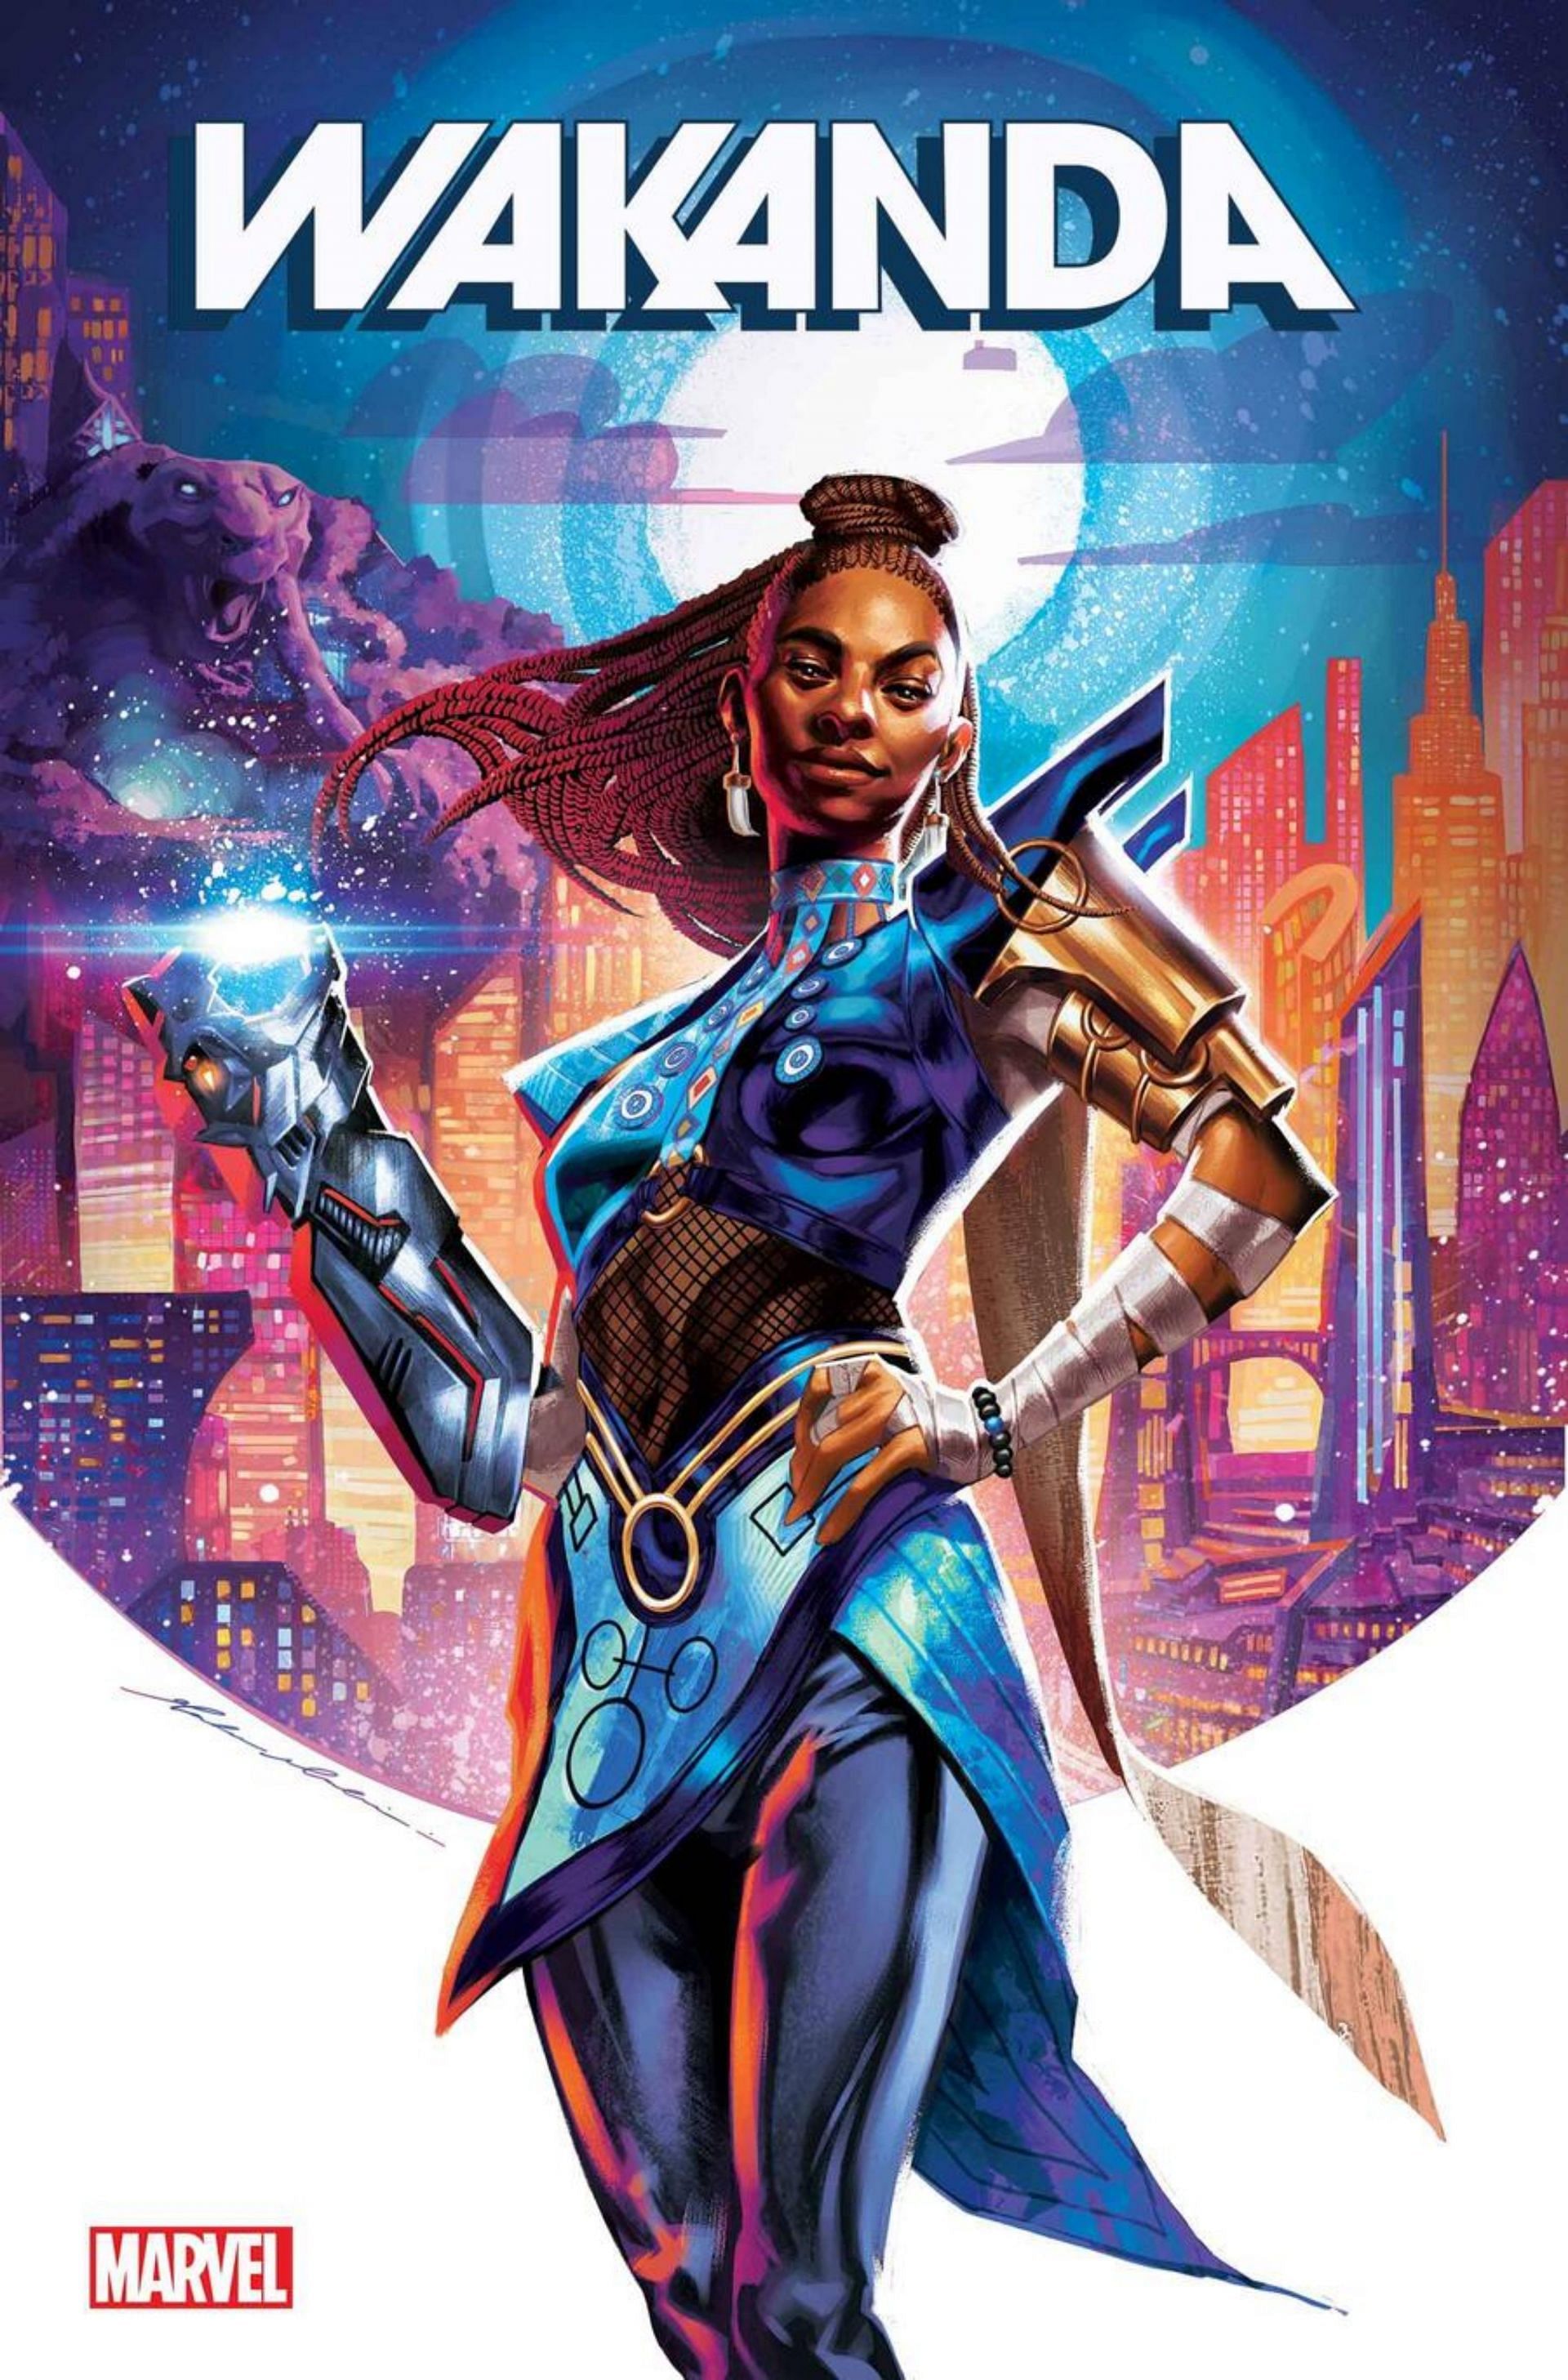 Wakanda comic cover (Image via Marvel Comics)